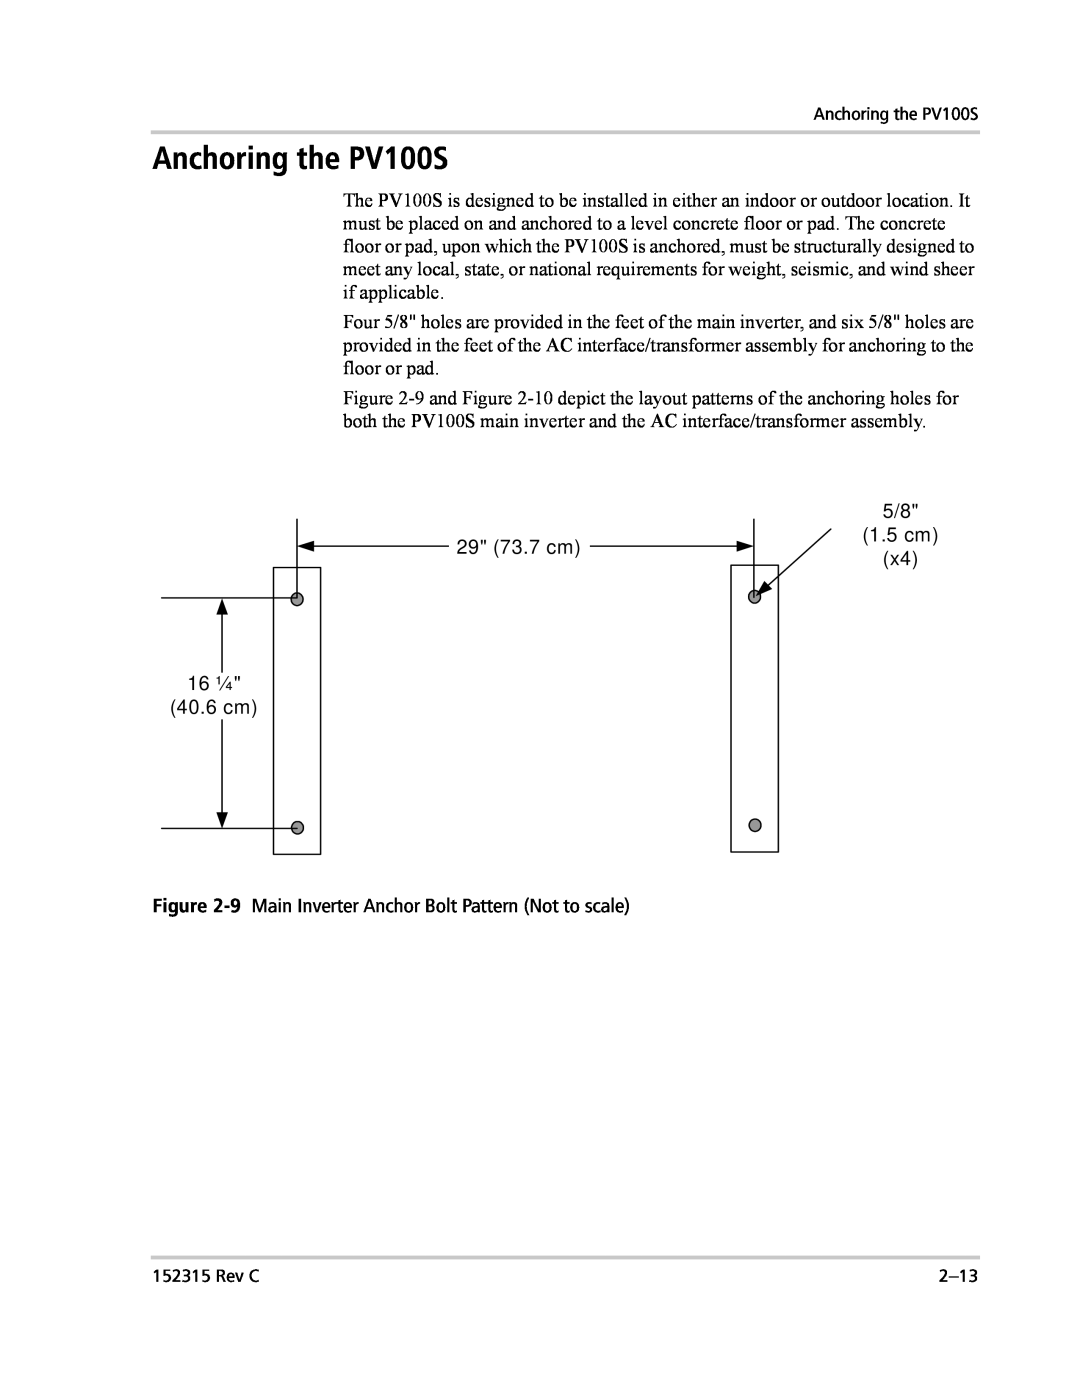 Xantrex Technology PV100S-480 installation manual Anchoring the PV100S, 29 73.7 cm, 5/8 1.5 cm x4, 16 ¼ 40.6 cm 